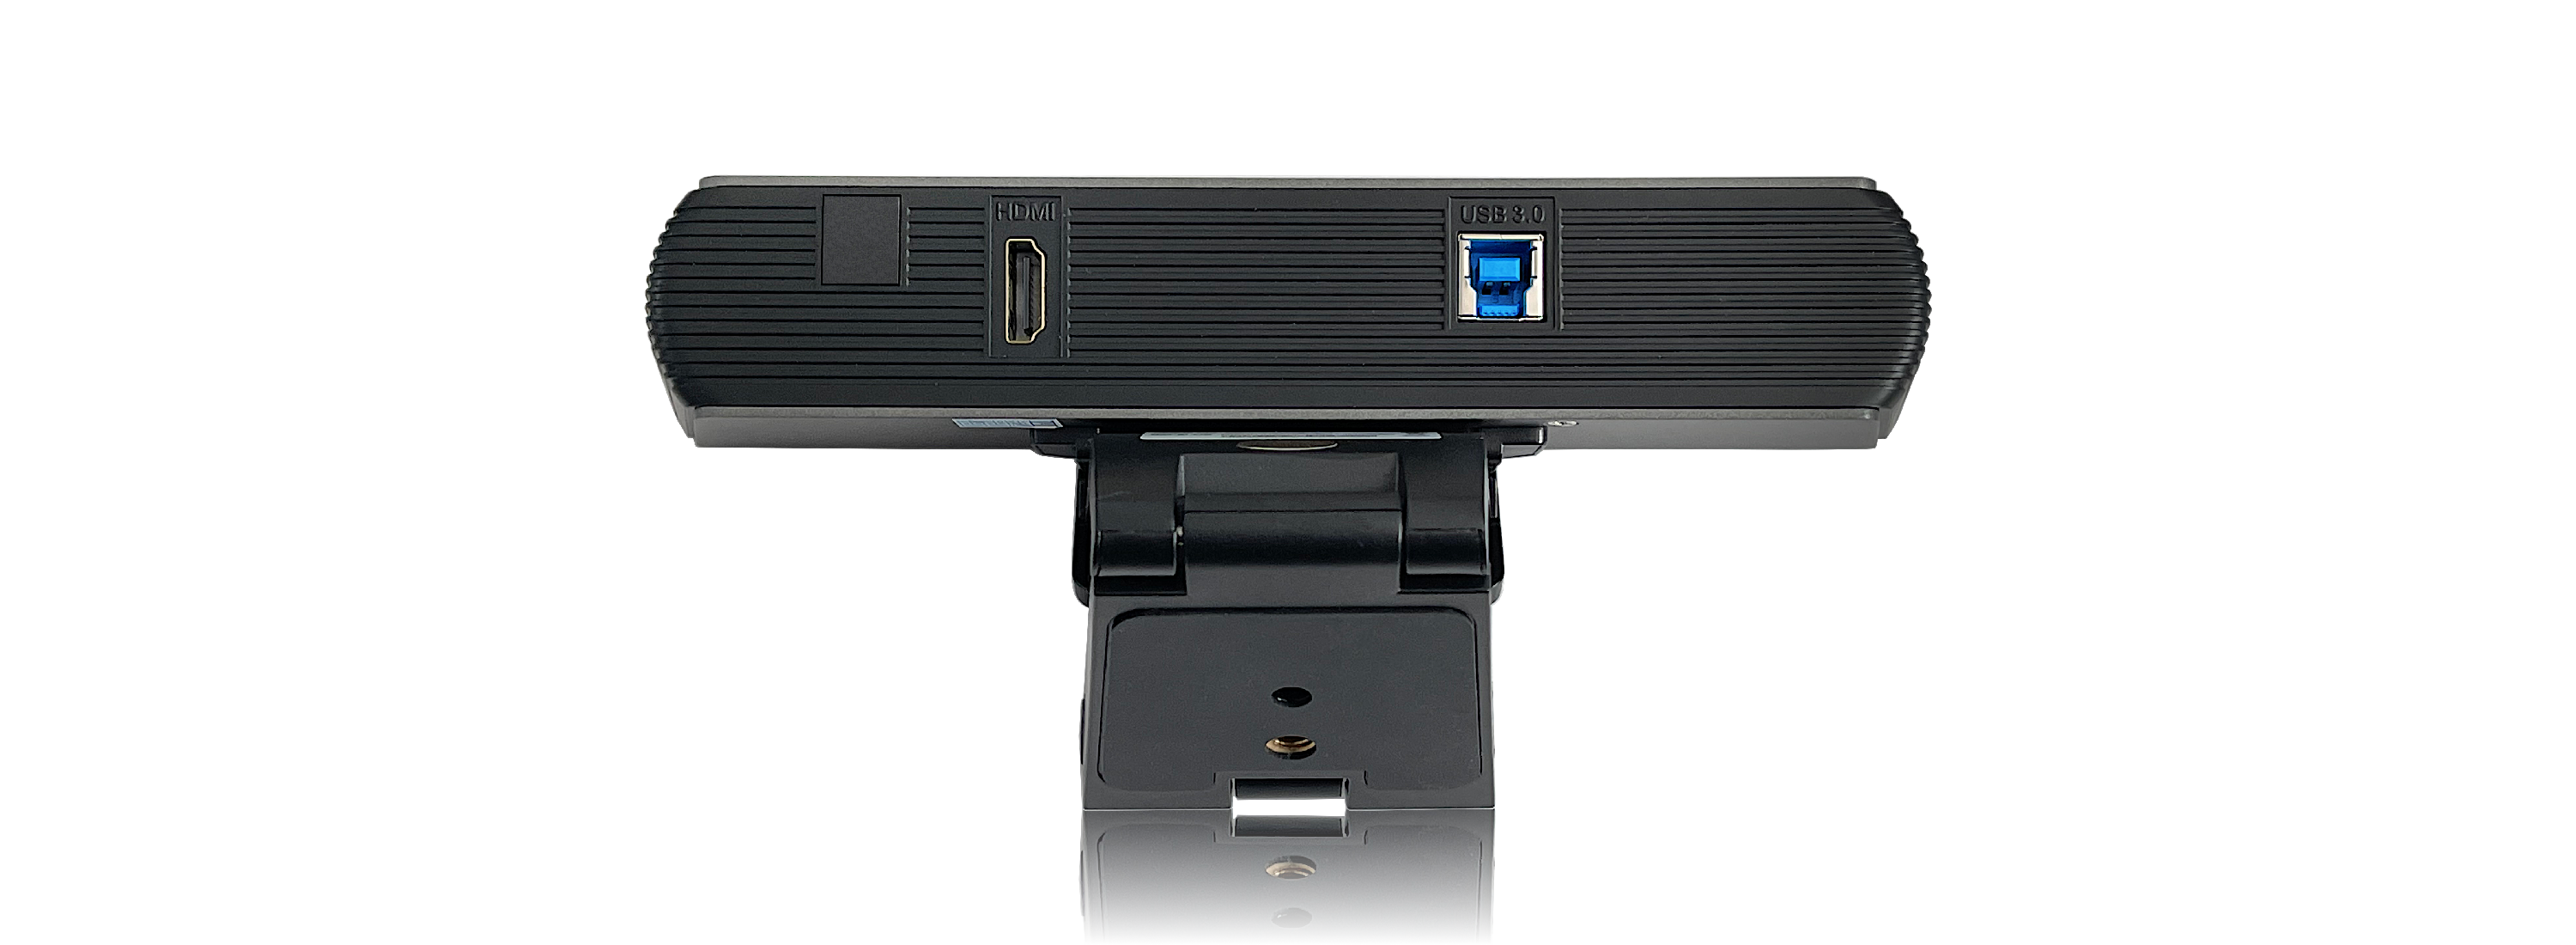 PTZ 4K broacast 3G SDI HDMI USB IP direct streaming Camera MaximusPro4k